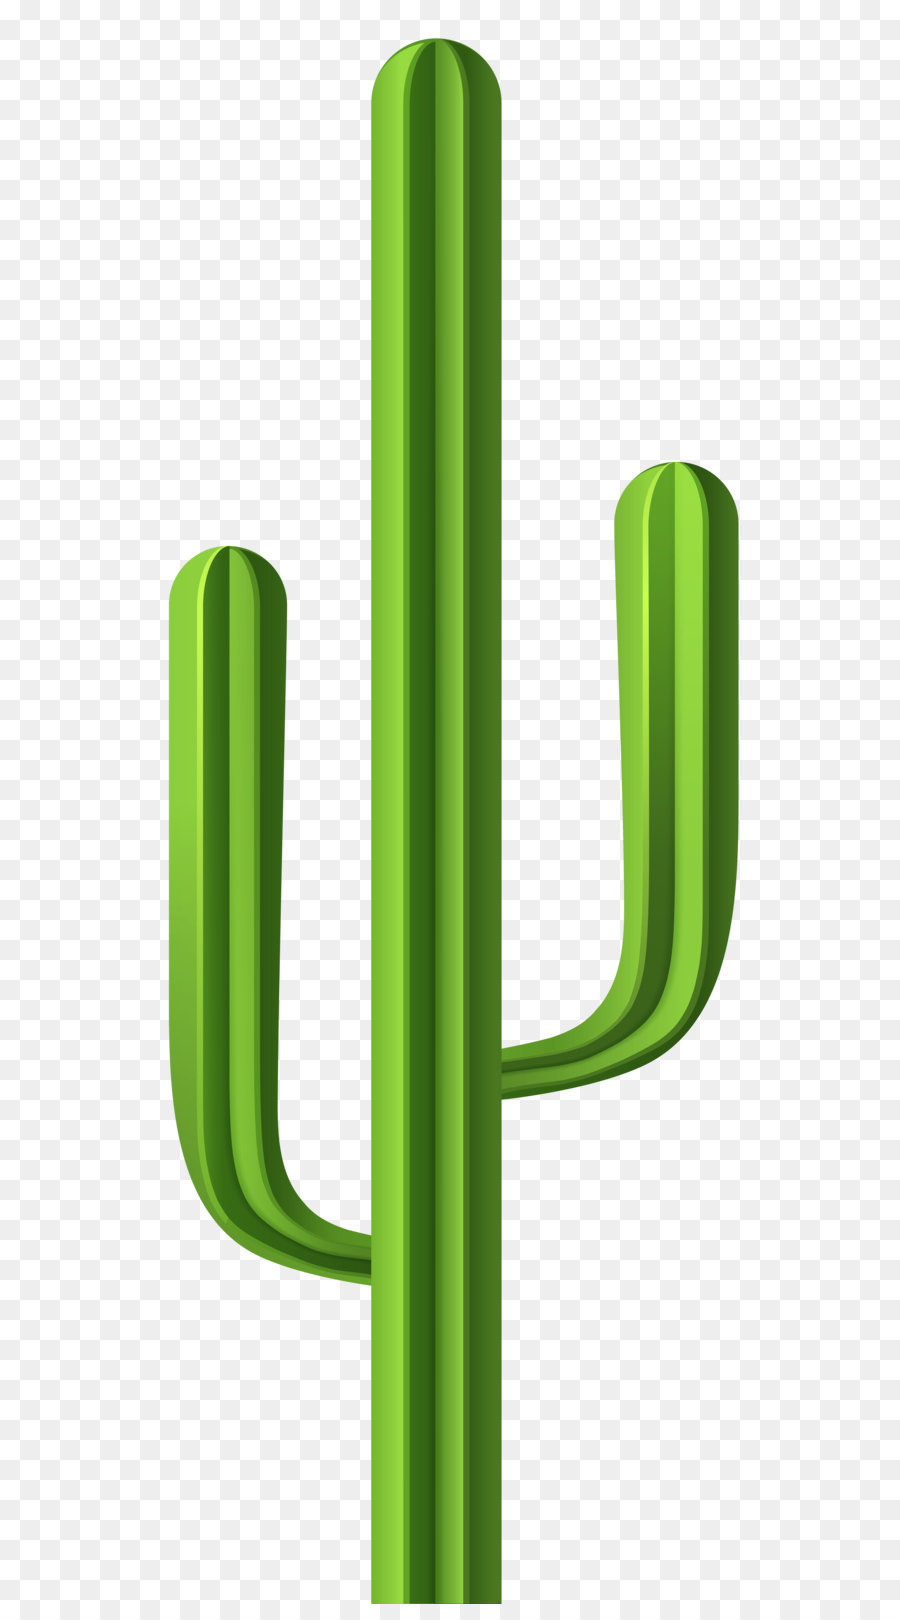 Cactaceae Clip art - Cactus PNG clipart Bild